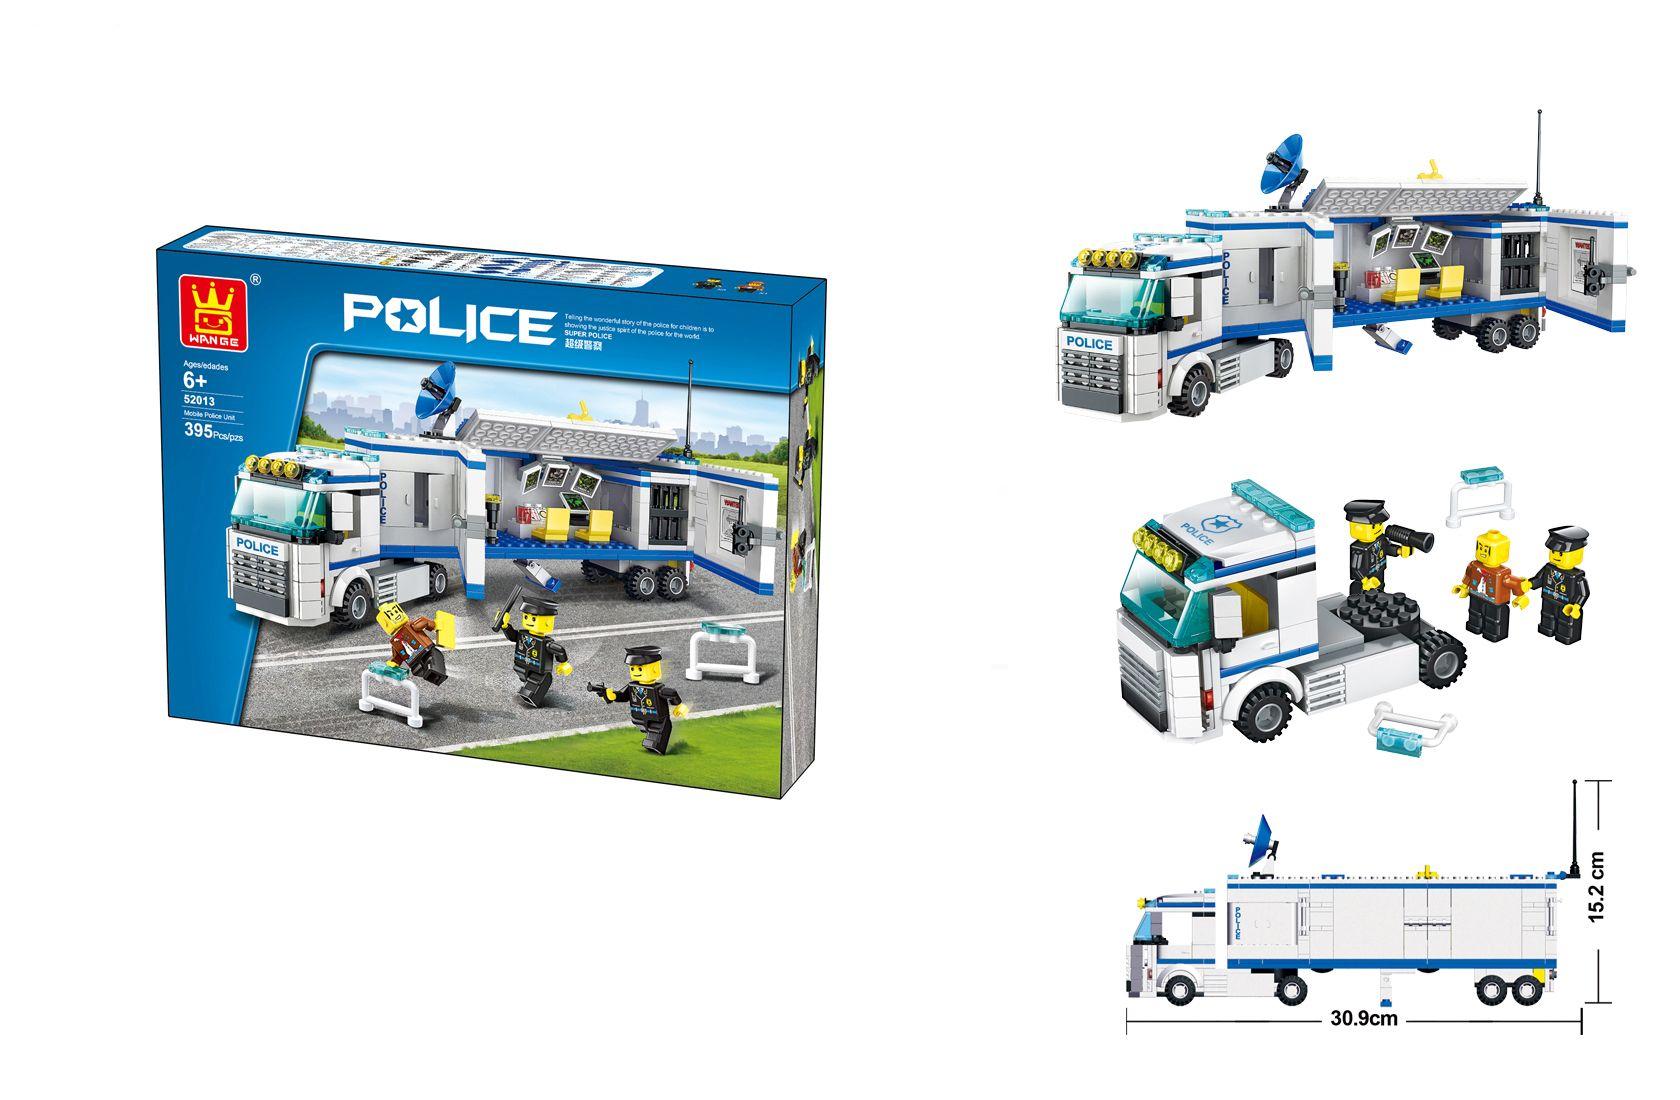 Police mobile command center